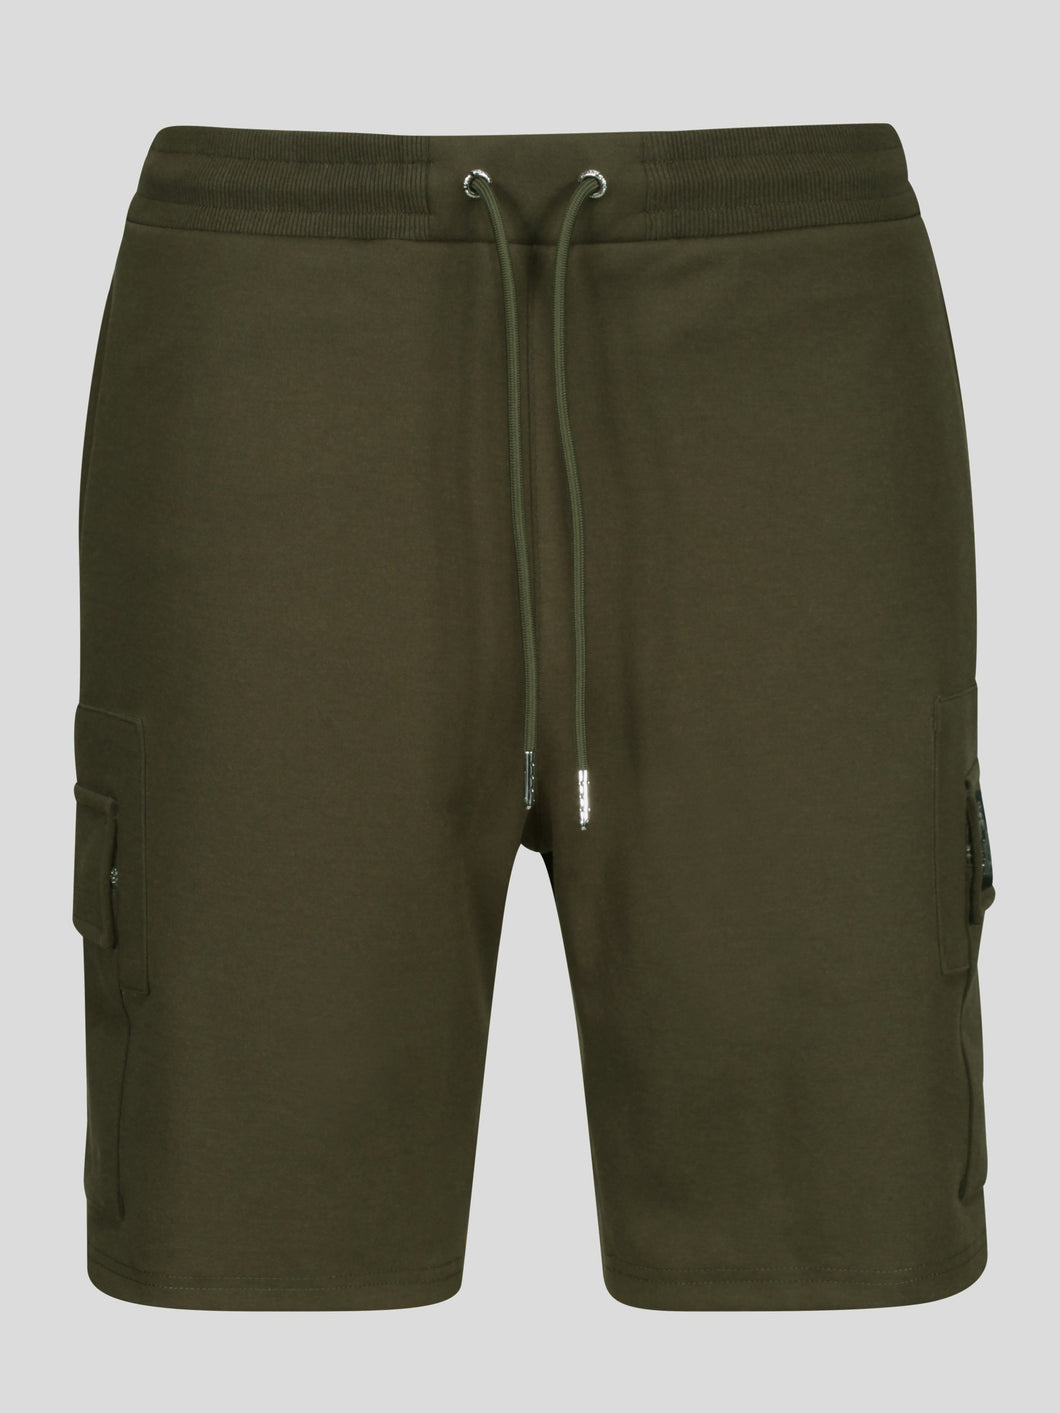 Luke 1977 Wizard Pocket Shorts Military Green